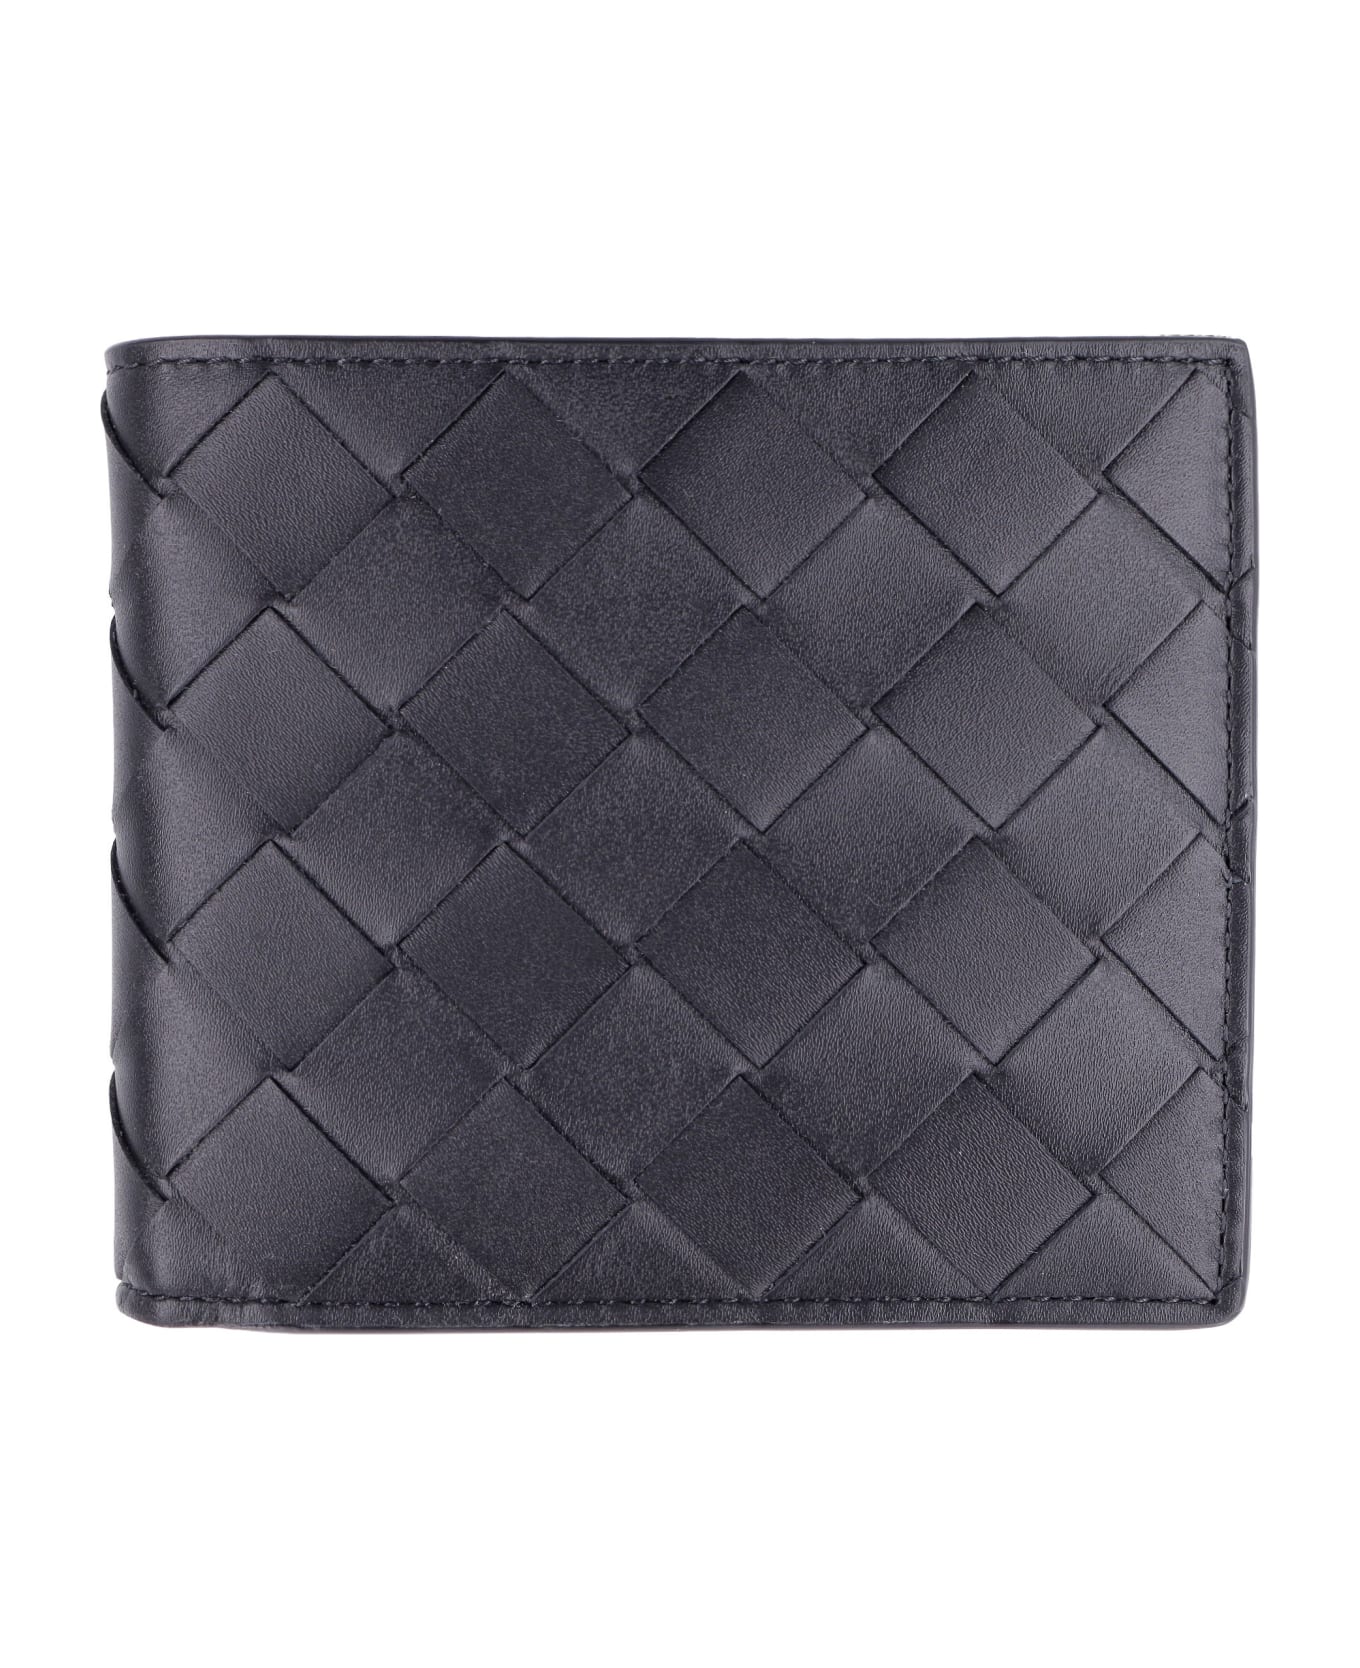 Bottega Veneta Leather Flap-over Wallet - BLACK